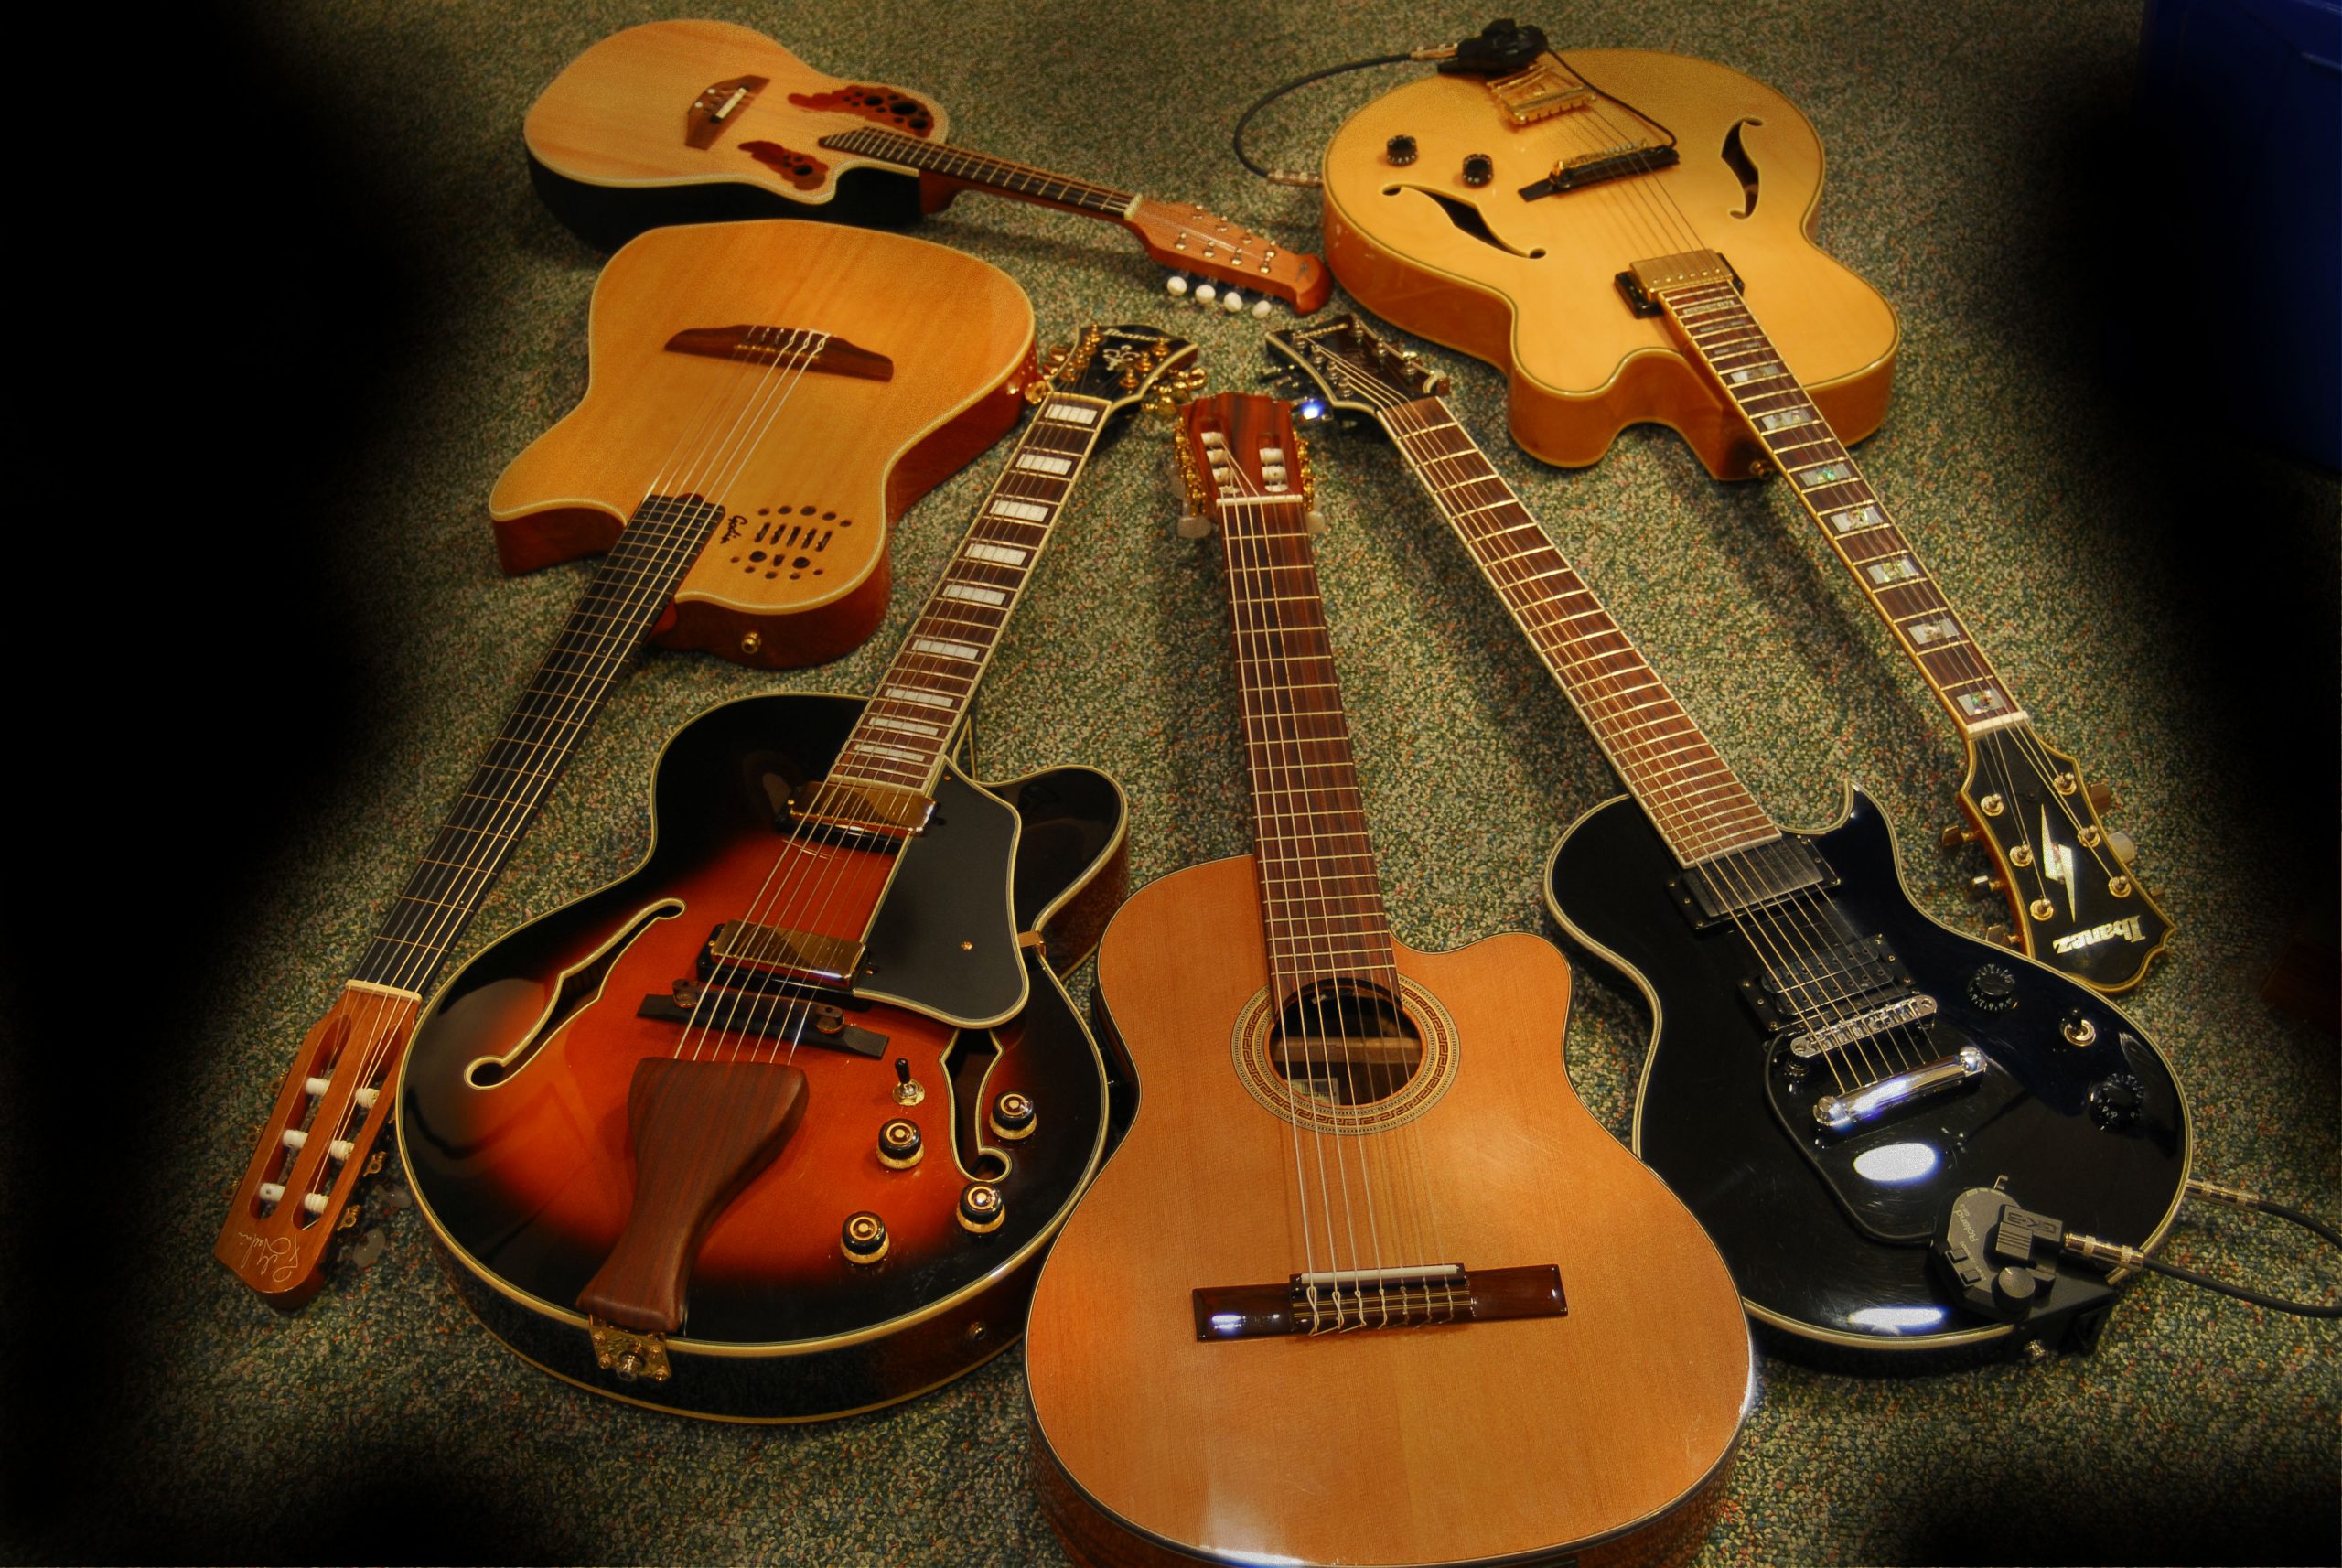 Guitars on the floor